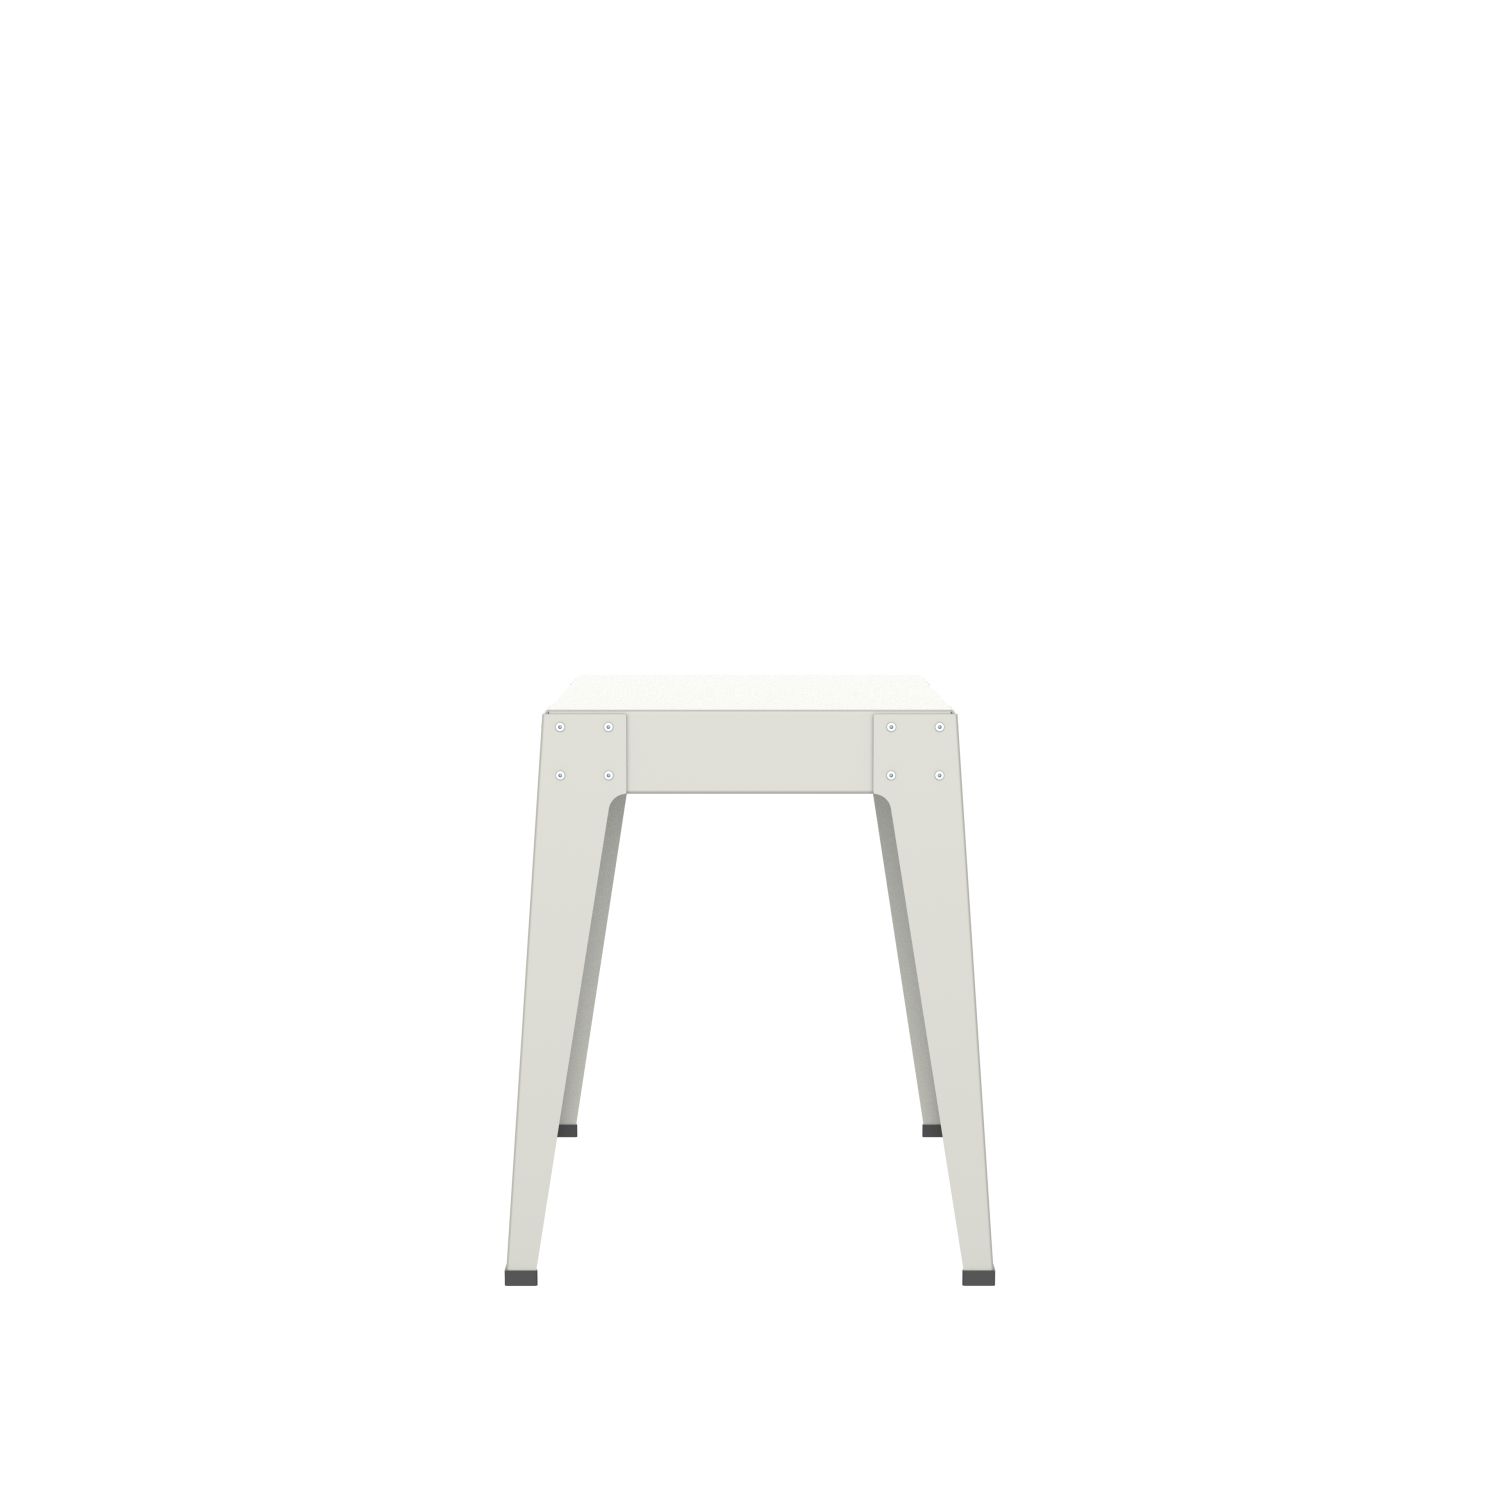 lensvelt piet hein eek aluminium series stool agata grey ral7038 hard leg ends